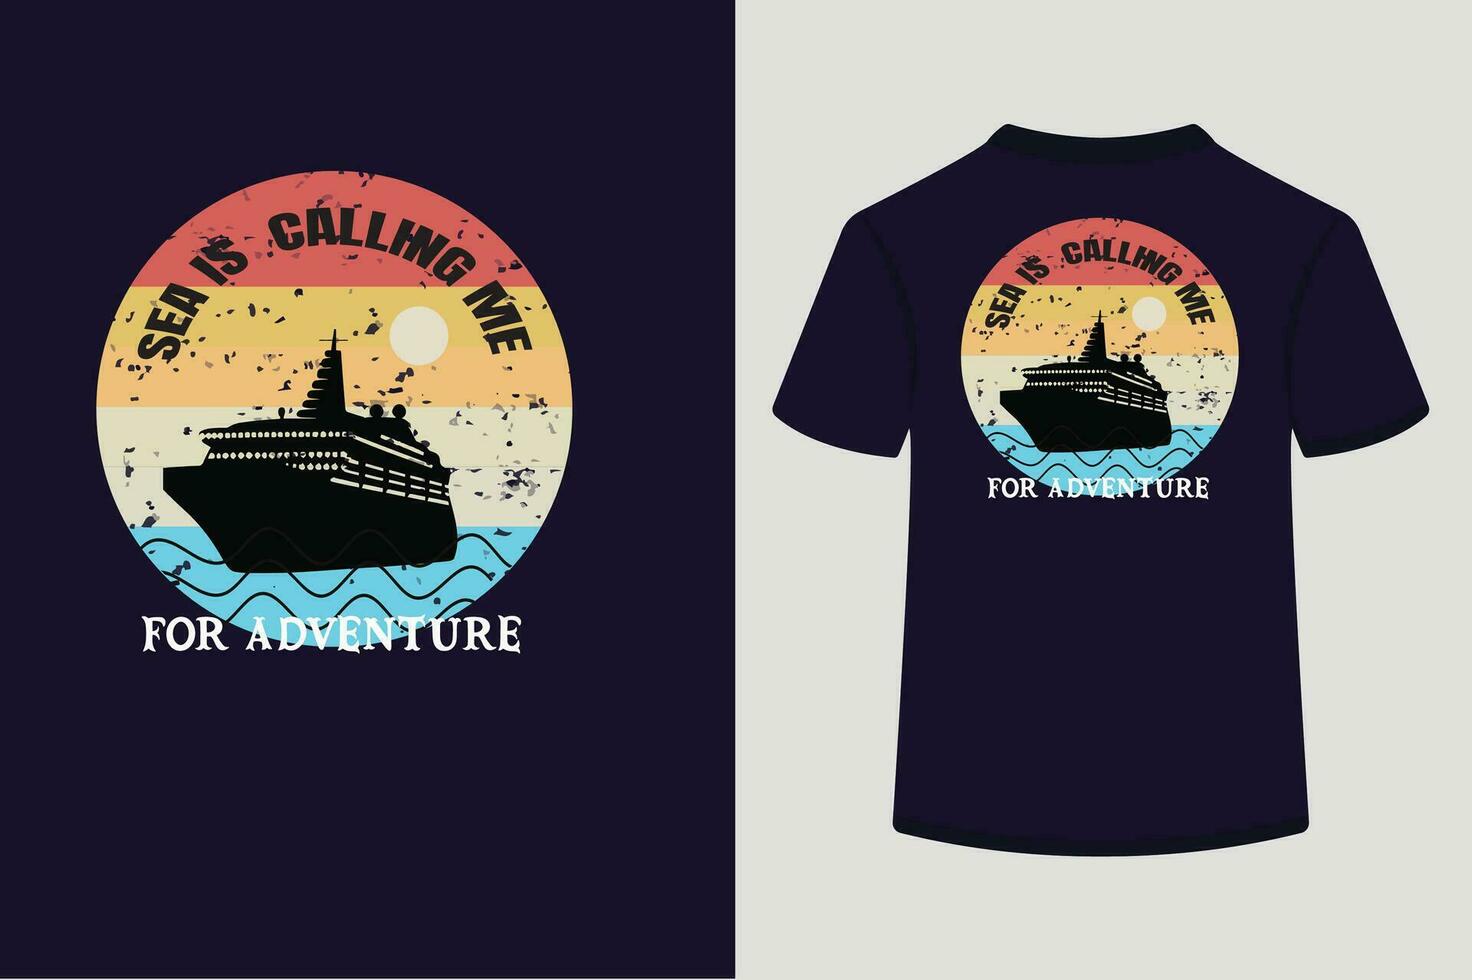 Retro vintage t shirt design,Sea is calling me for adventure. vector